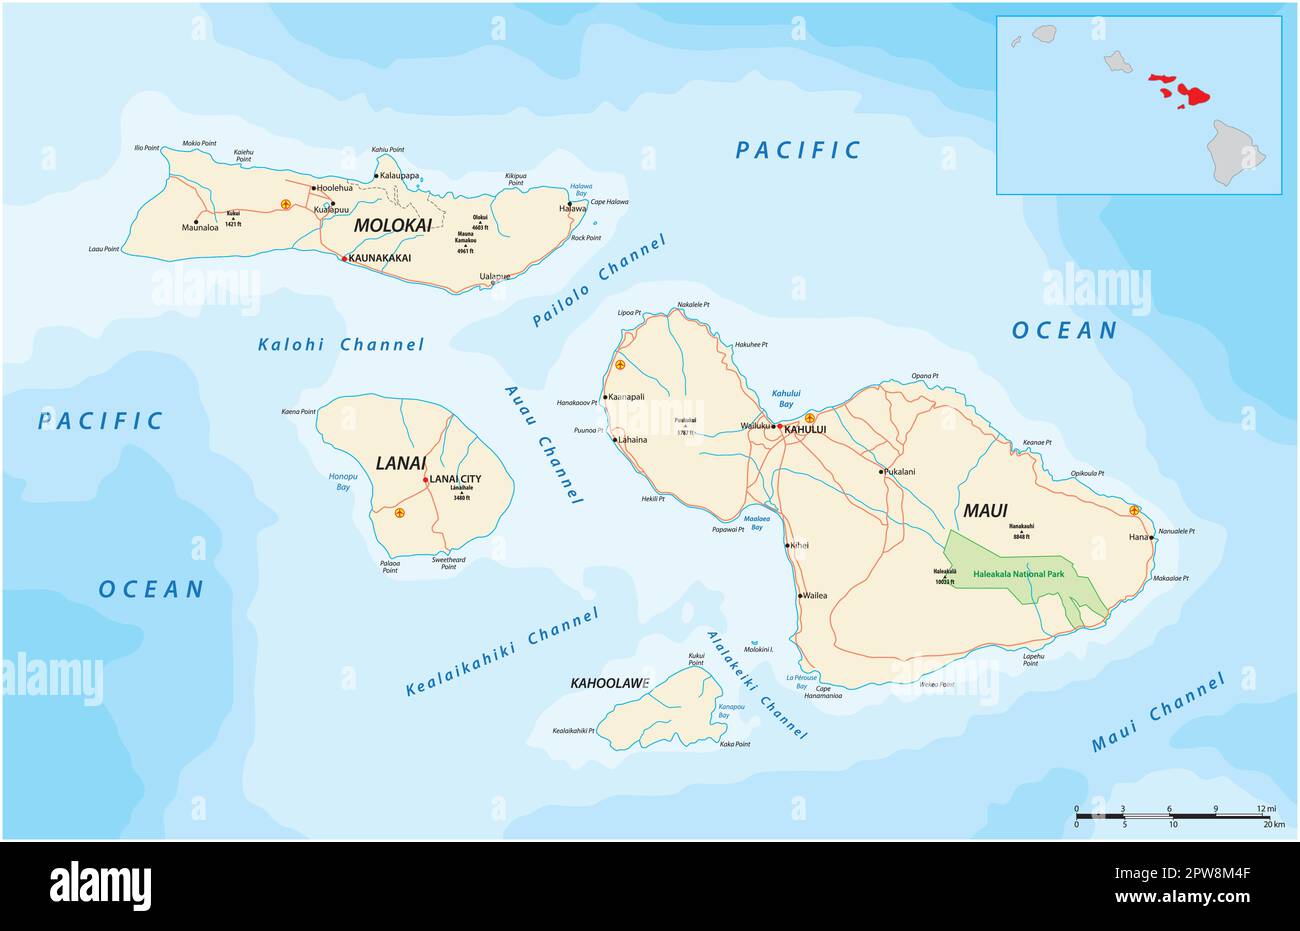 Road map of the Hawaiian Islands of Maui, Molokai, Lanai and Kahoolawe Stock Vector